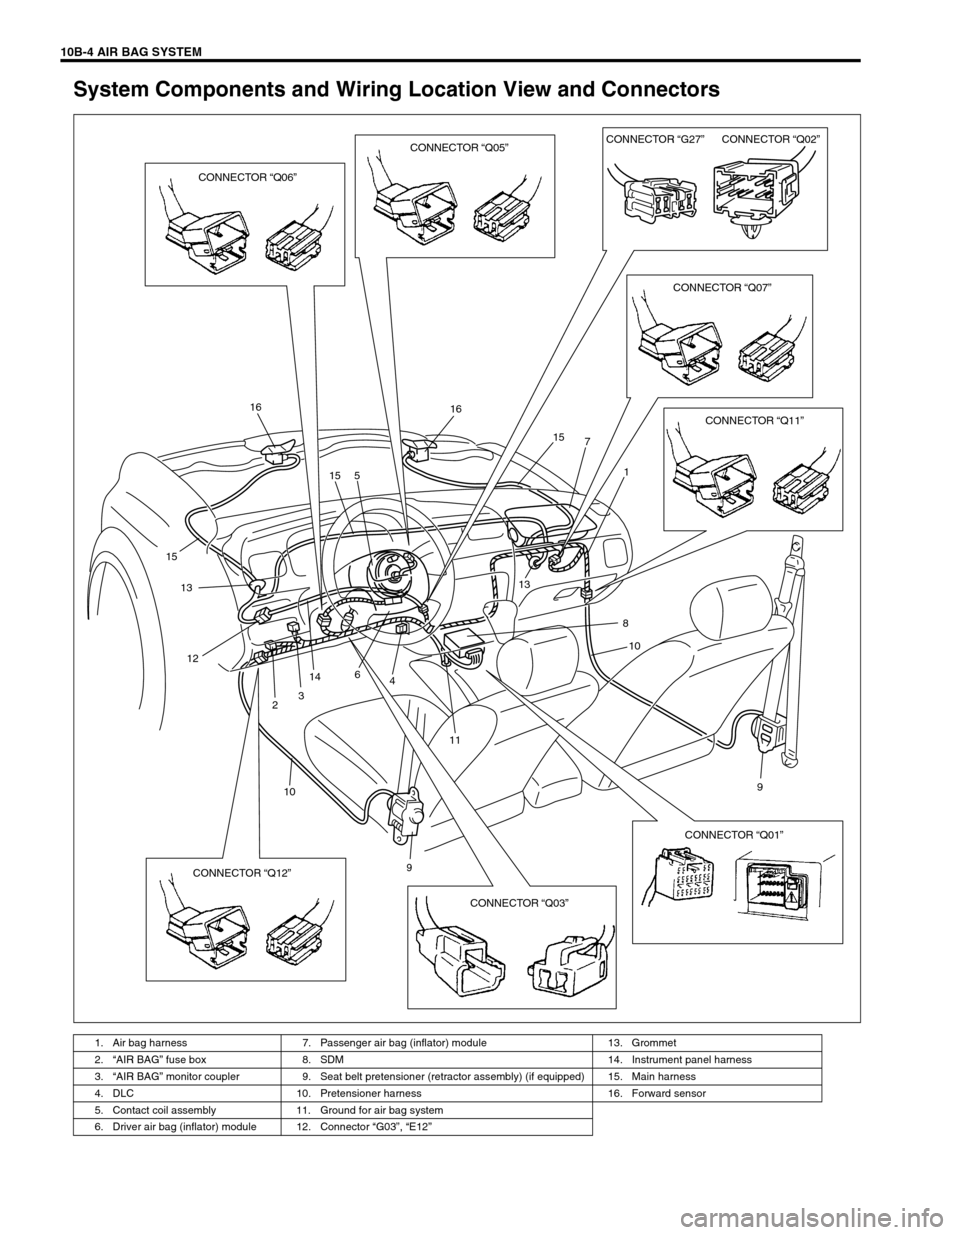 SUZUKI GRAND VITARA 2001 2.G Service Manual 10B-4 AIR BAG SYSTEM
System Components and Wiring Location View and Connectors
1. Air bag harness  7. Passenger air bag (inflator) module 13. Grommet
2.“AIR BAG” fuse box 8. SDM 14. Instrument pan